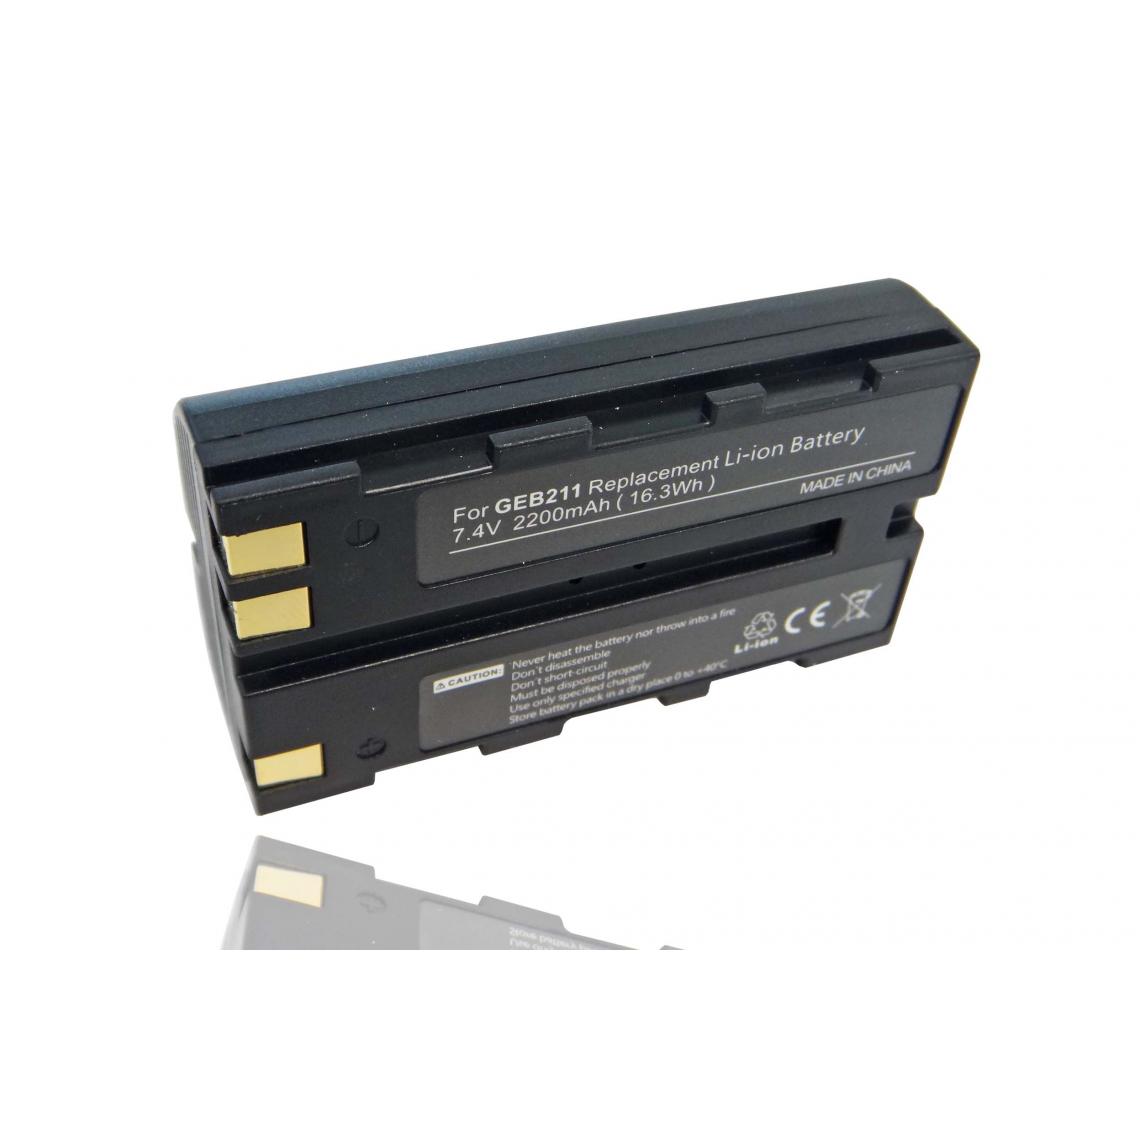 Vhbw - vhbw Batterie compatible avec Leica Piper 100, 100 Laser, 200 dispositif de mesure laser, outil de mesure (2200mAh, 7,4V, Li-ion) - Piles rechargeables